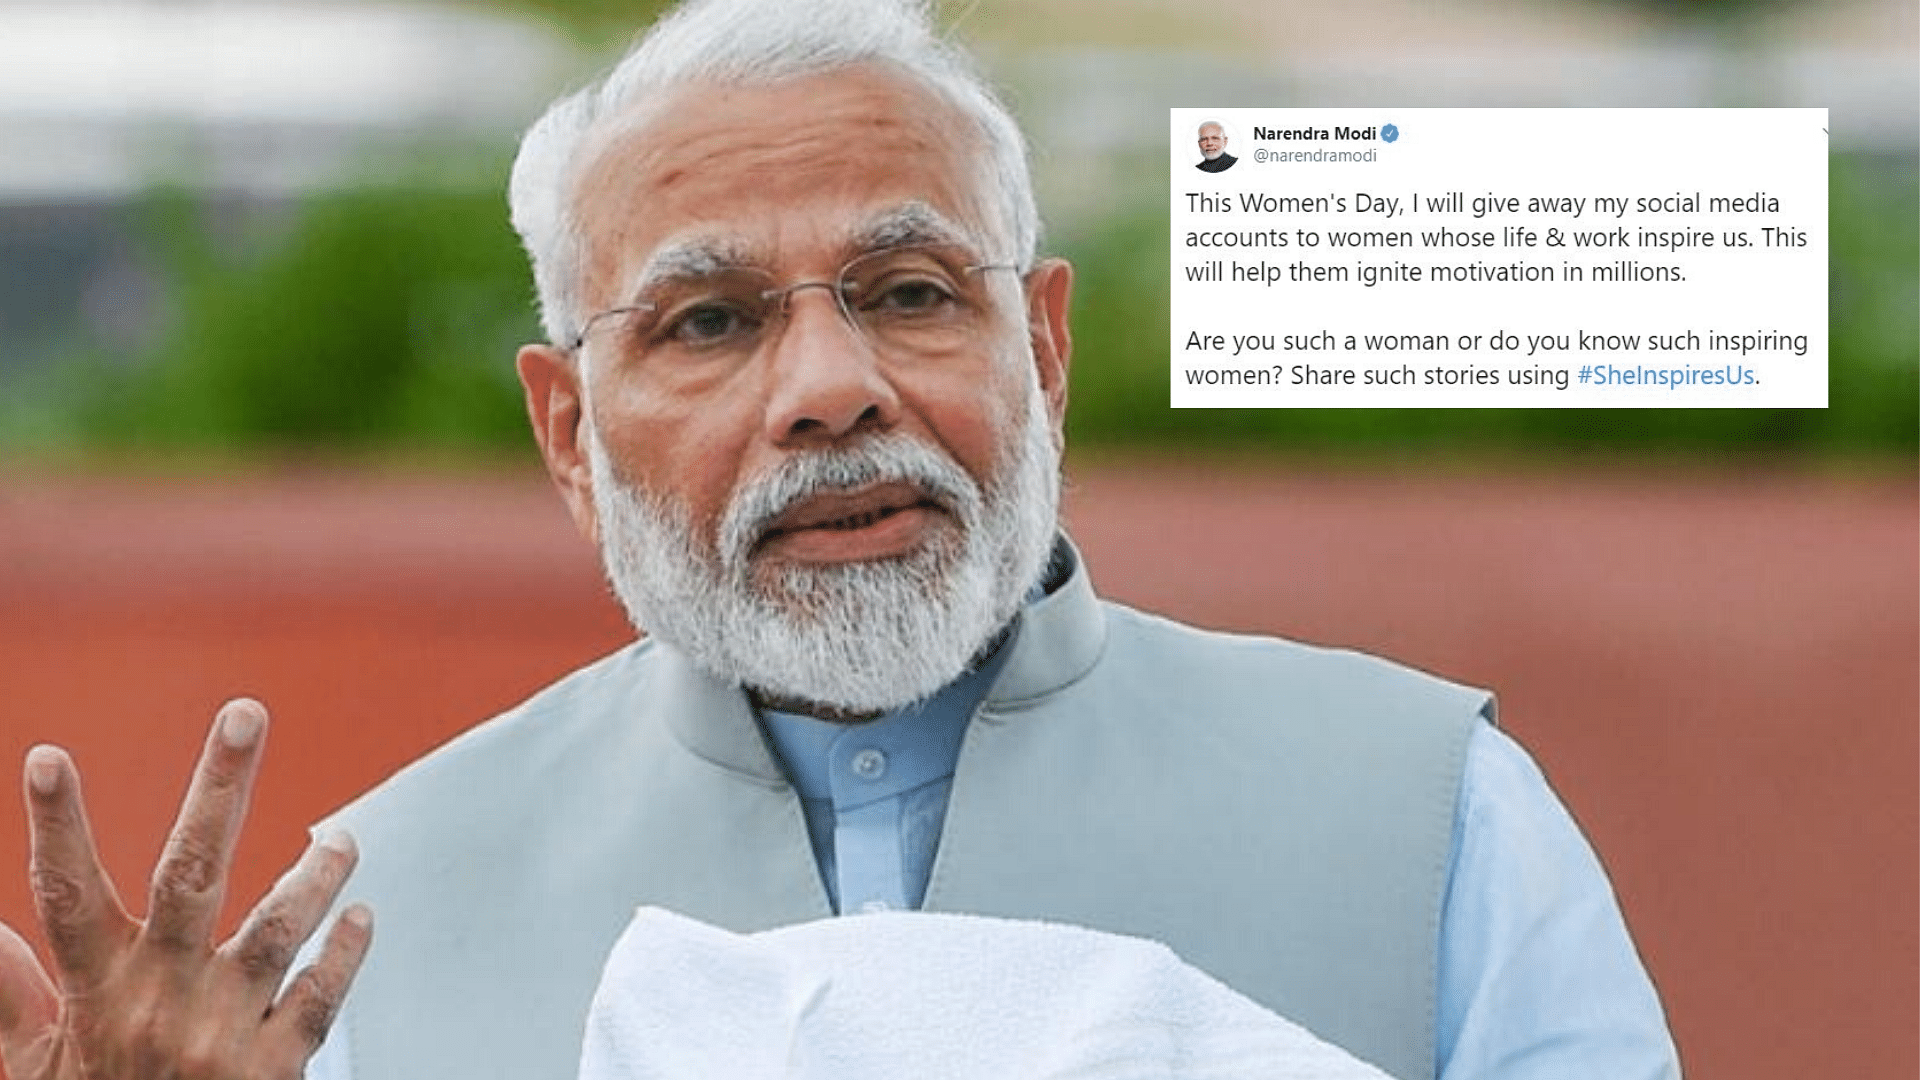 PM Modi on his tweet hinting at quitting social media.